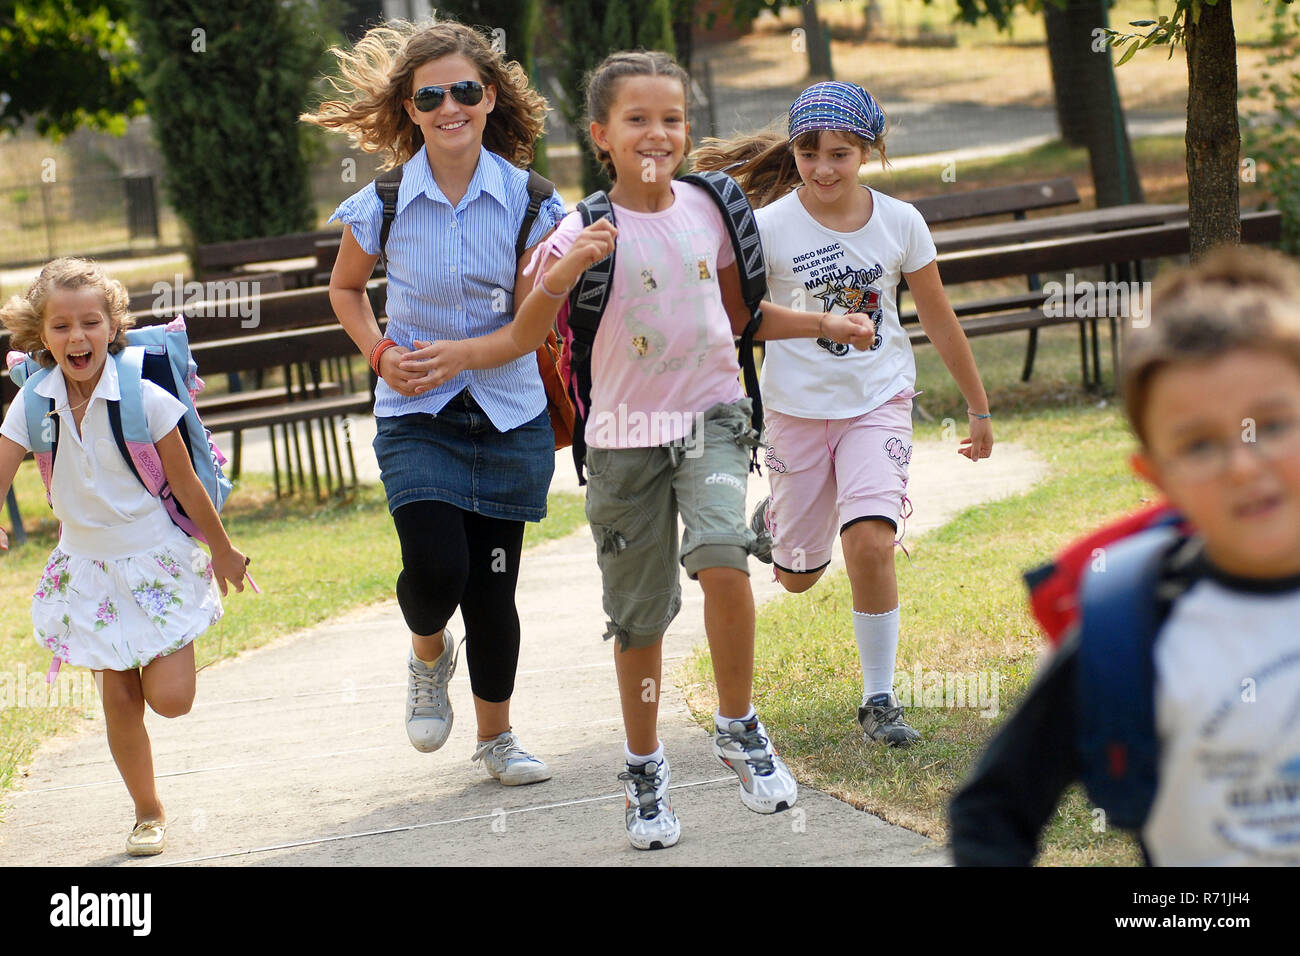 Group of schoolchilds running     Photo © Daiano Cristini/Sintesi/Alamy Stock Photo Stock Photo